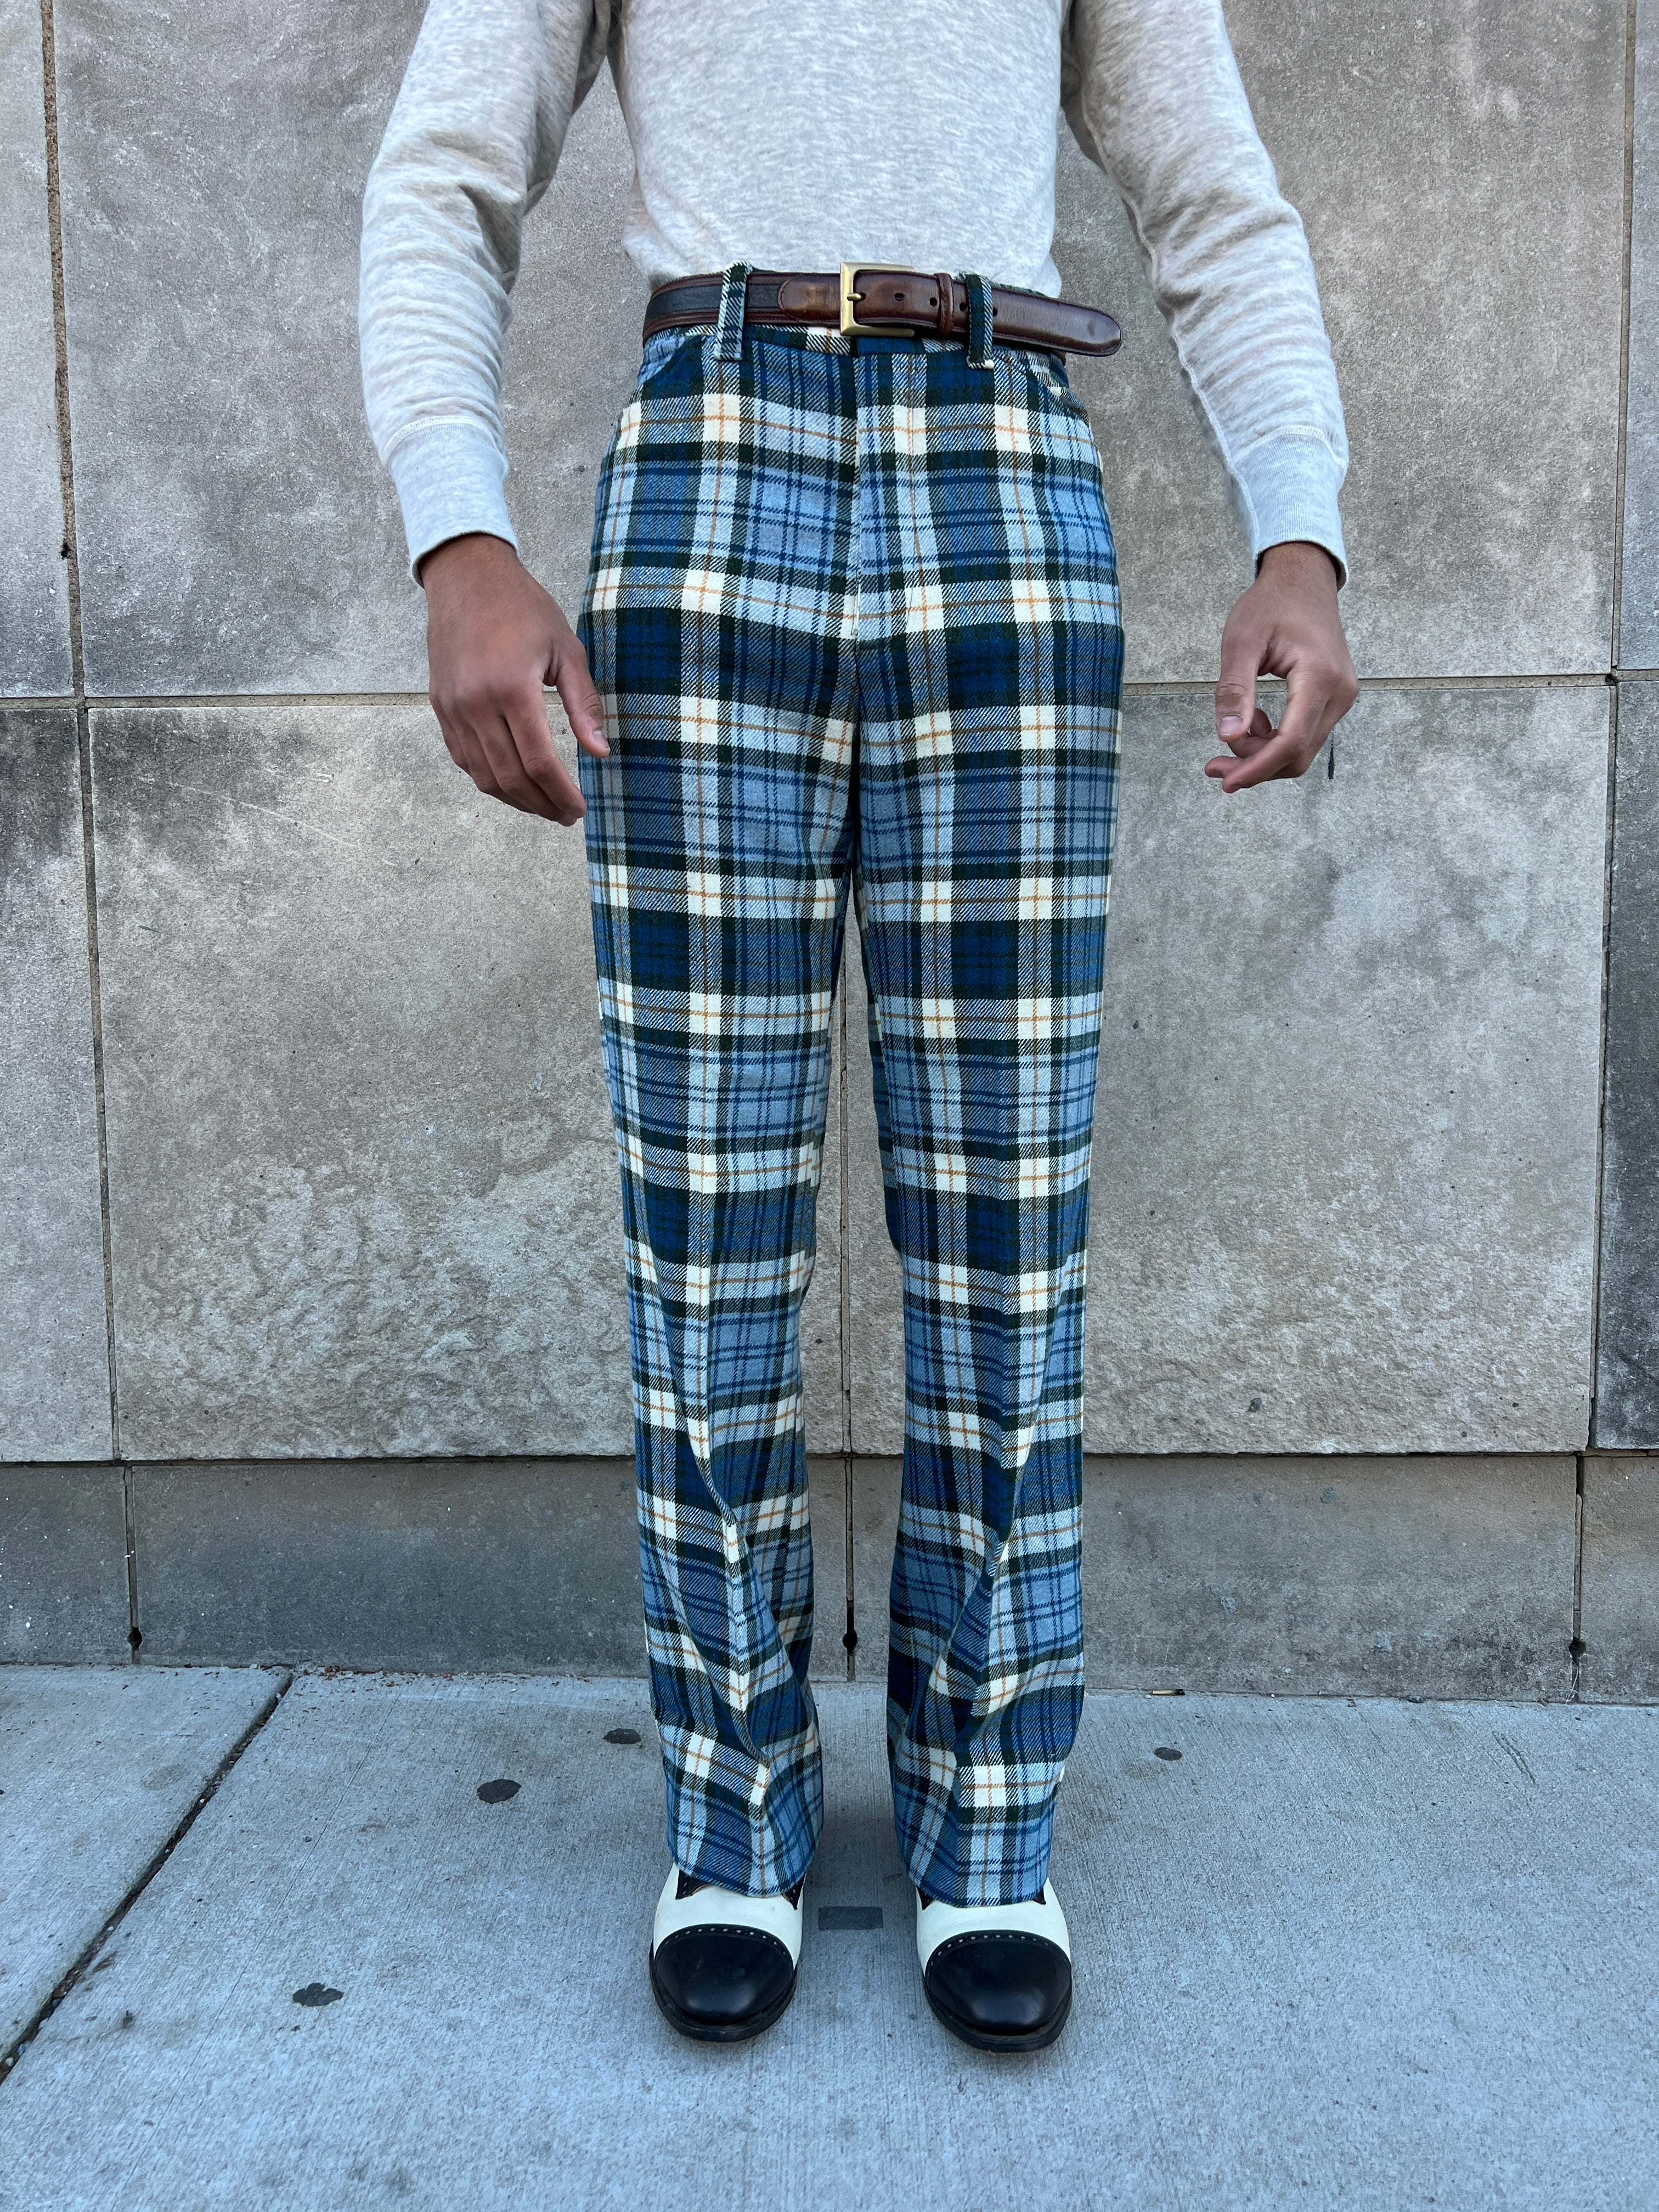 70s Plaid High Waisted Pants - Men's Small, Women's Medium, 29